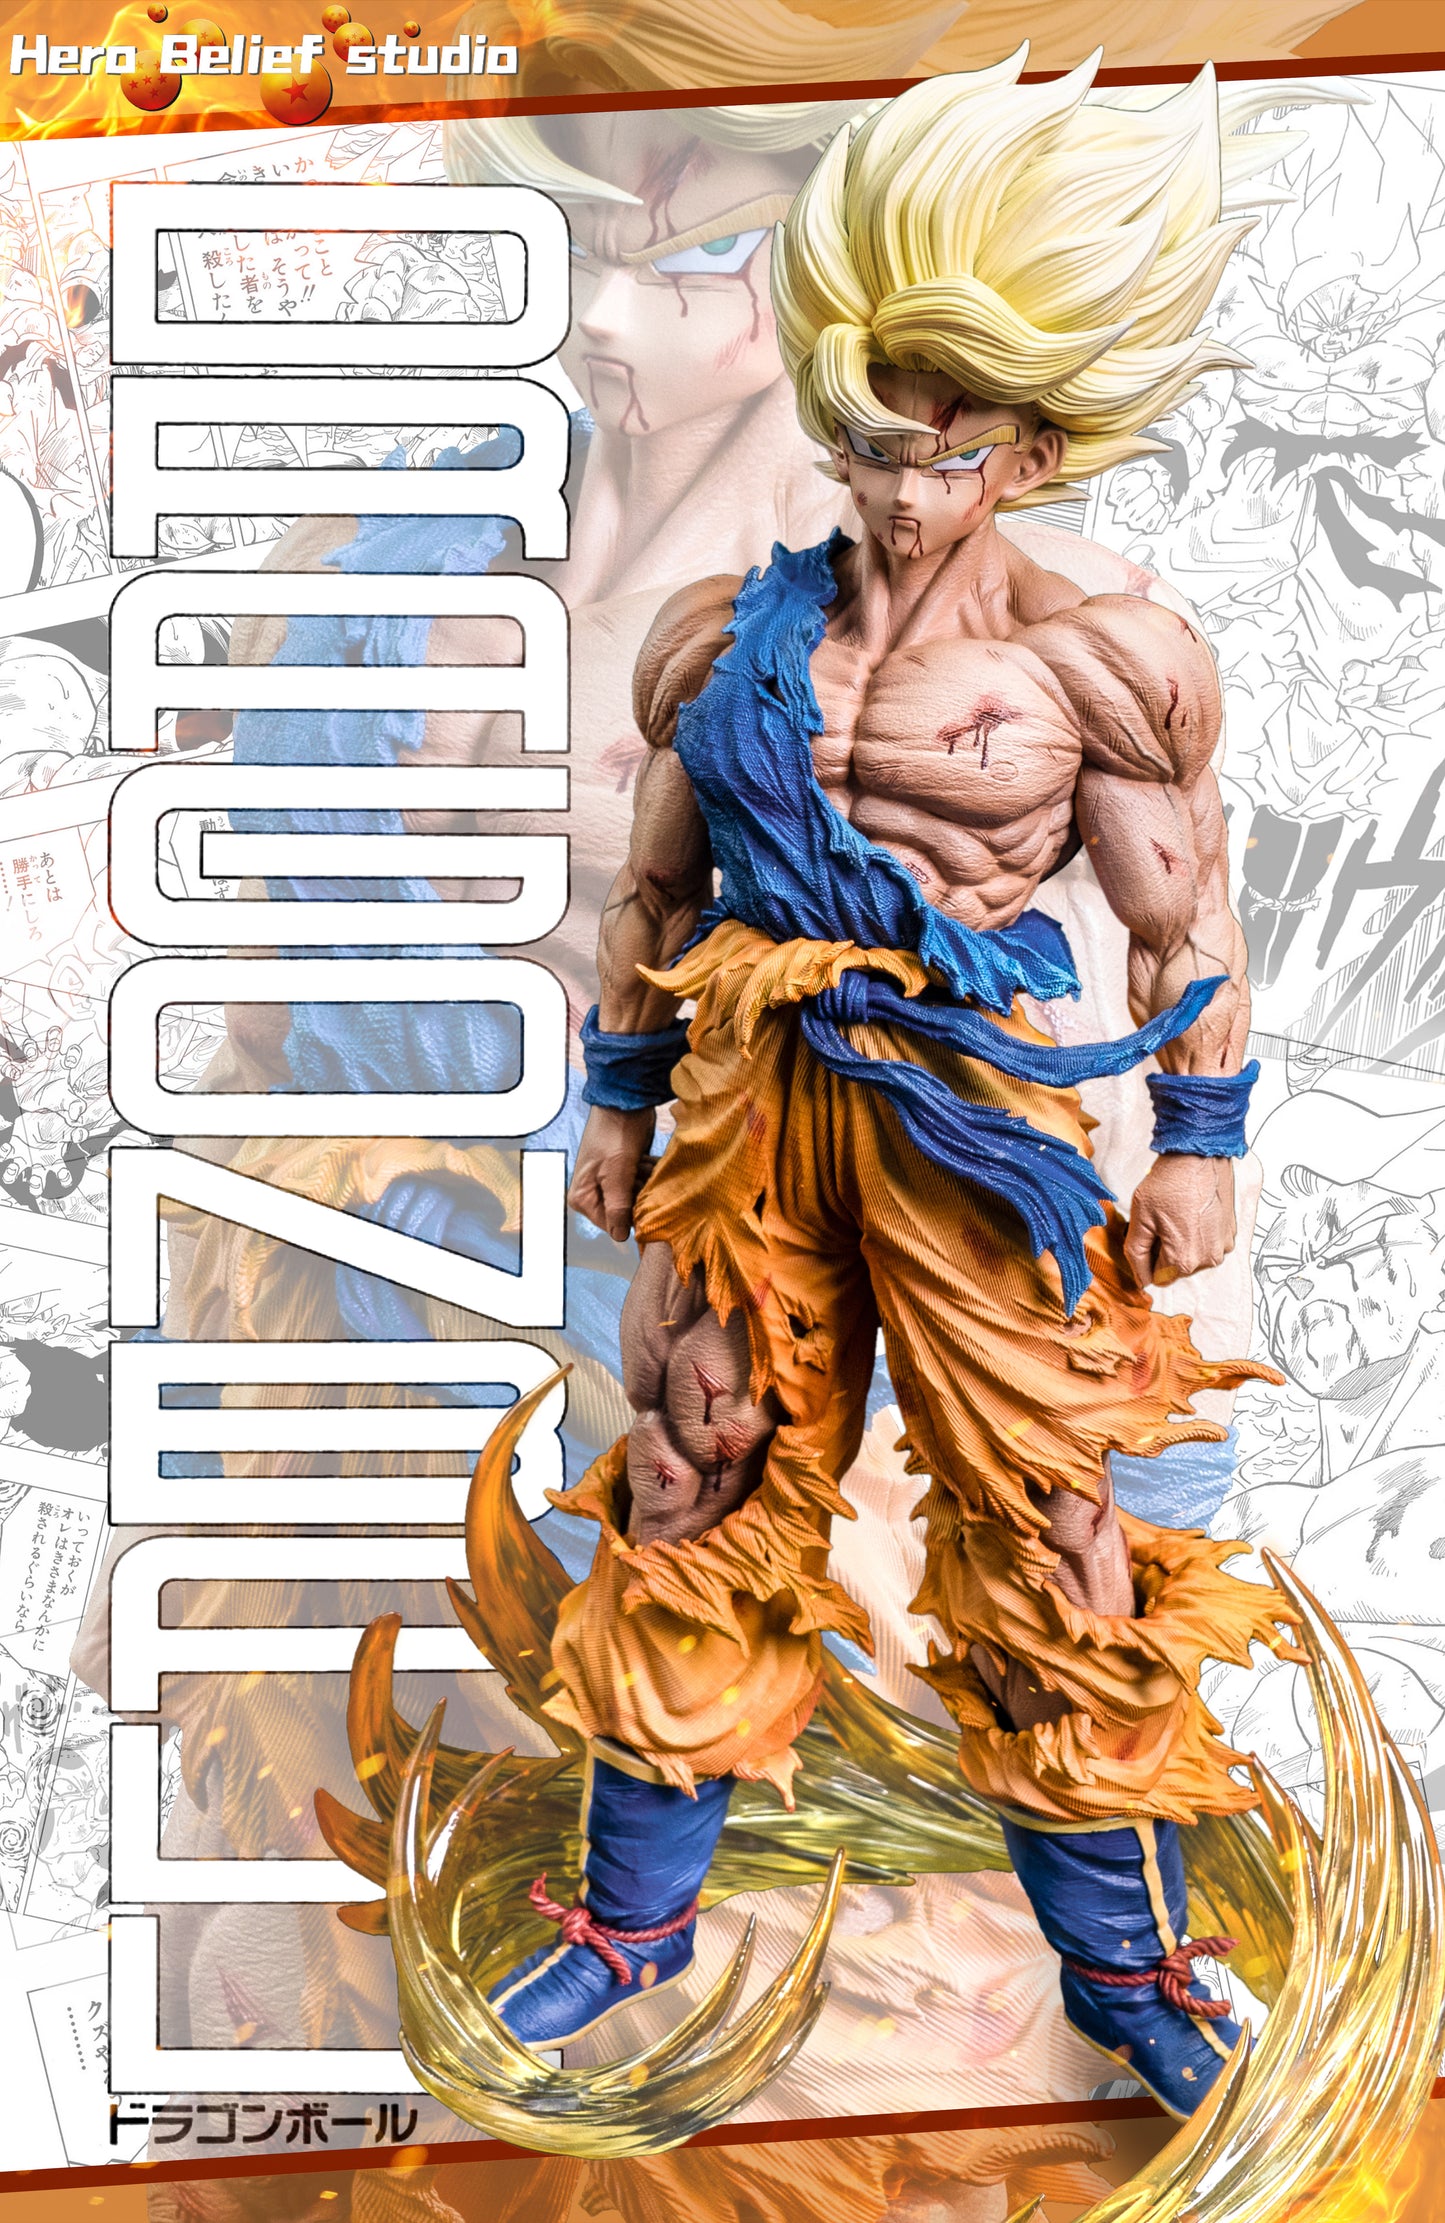 HERO BELIEF STUDIO – DRAGON BALL Z: 3RD ANNIVERSARY SUPER SAIYAN GOKU [SOLD OUT]